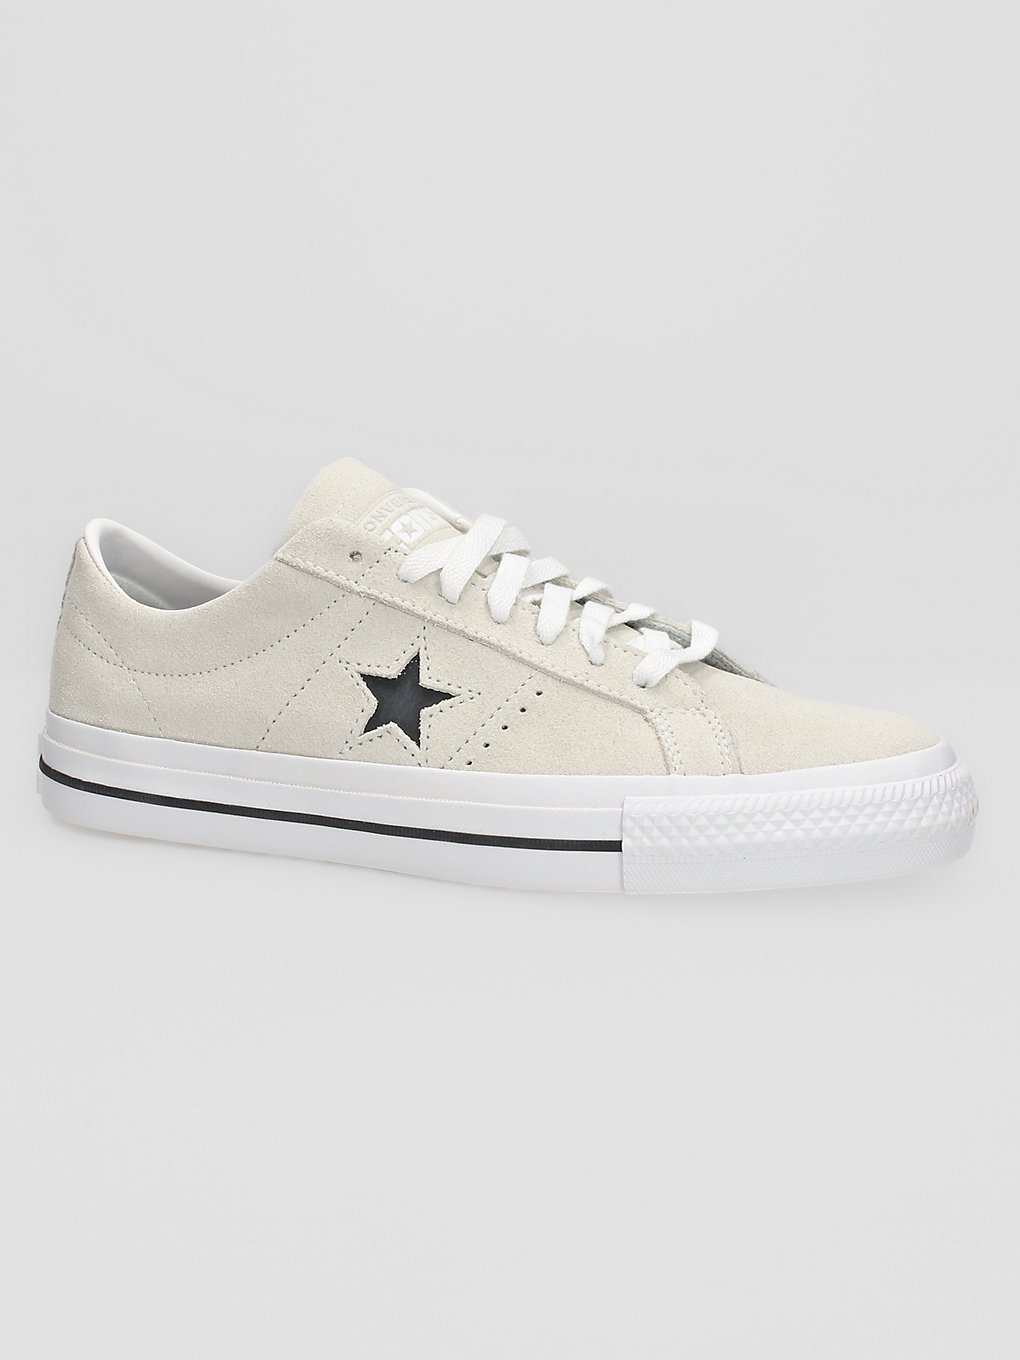 Converse Cons One Star Pro Suede Skate Shoes hvit